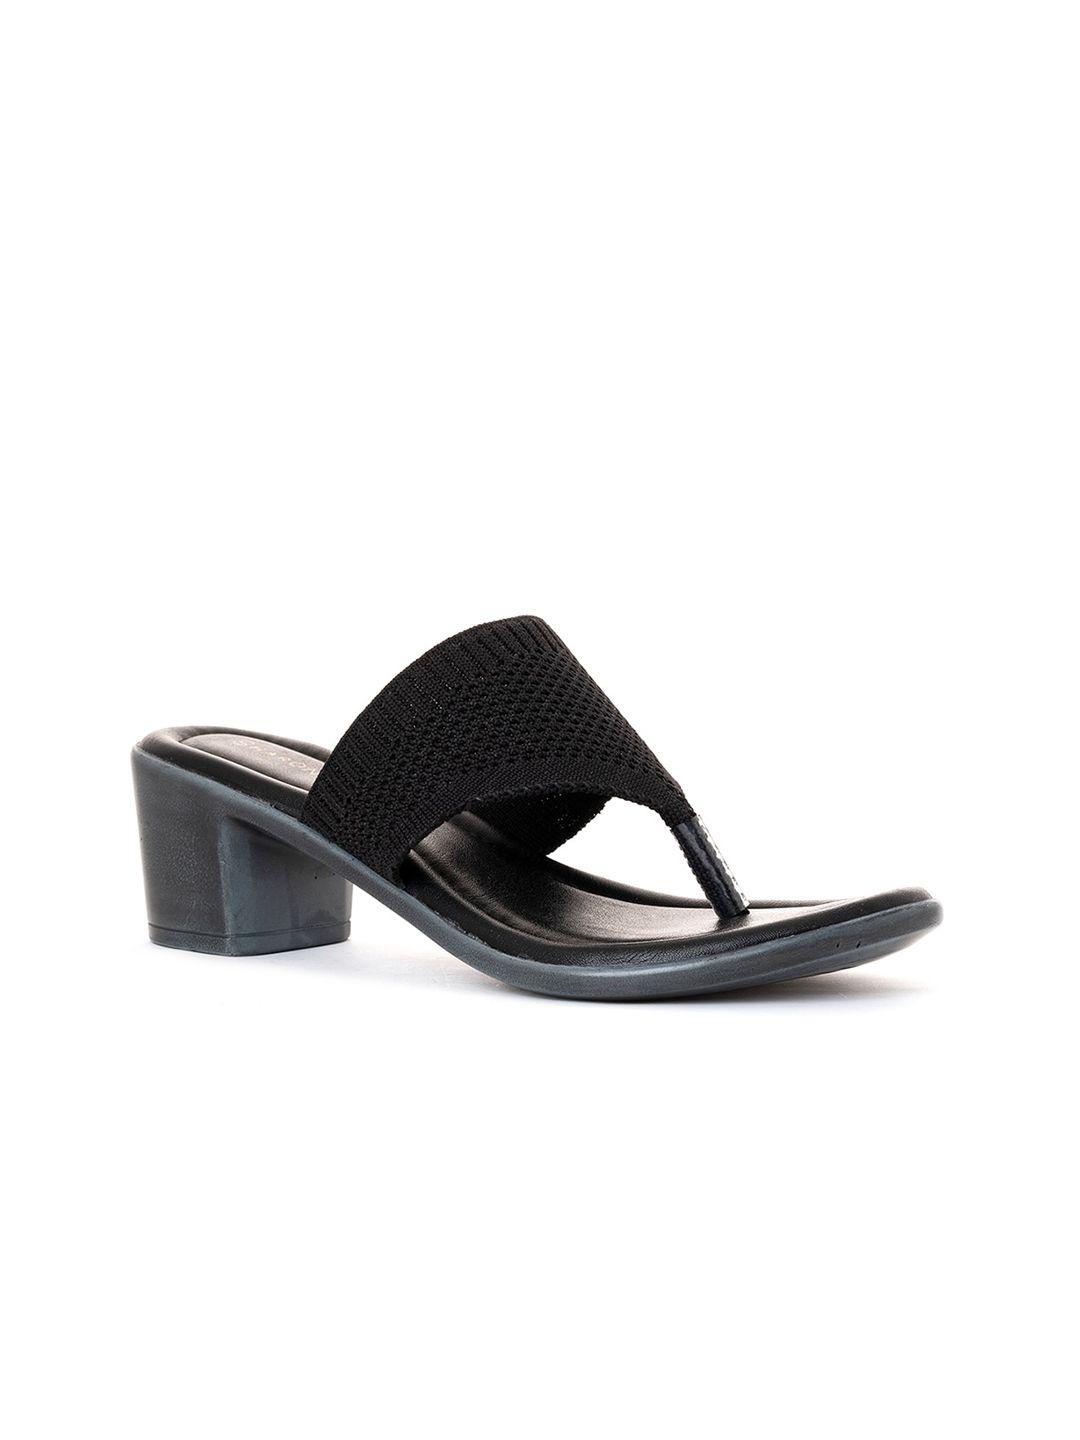 khadims-black-textured-block-sandals